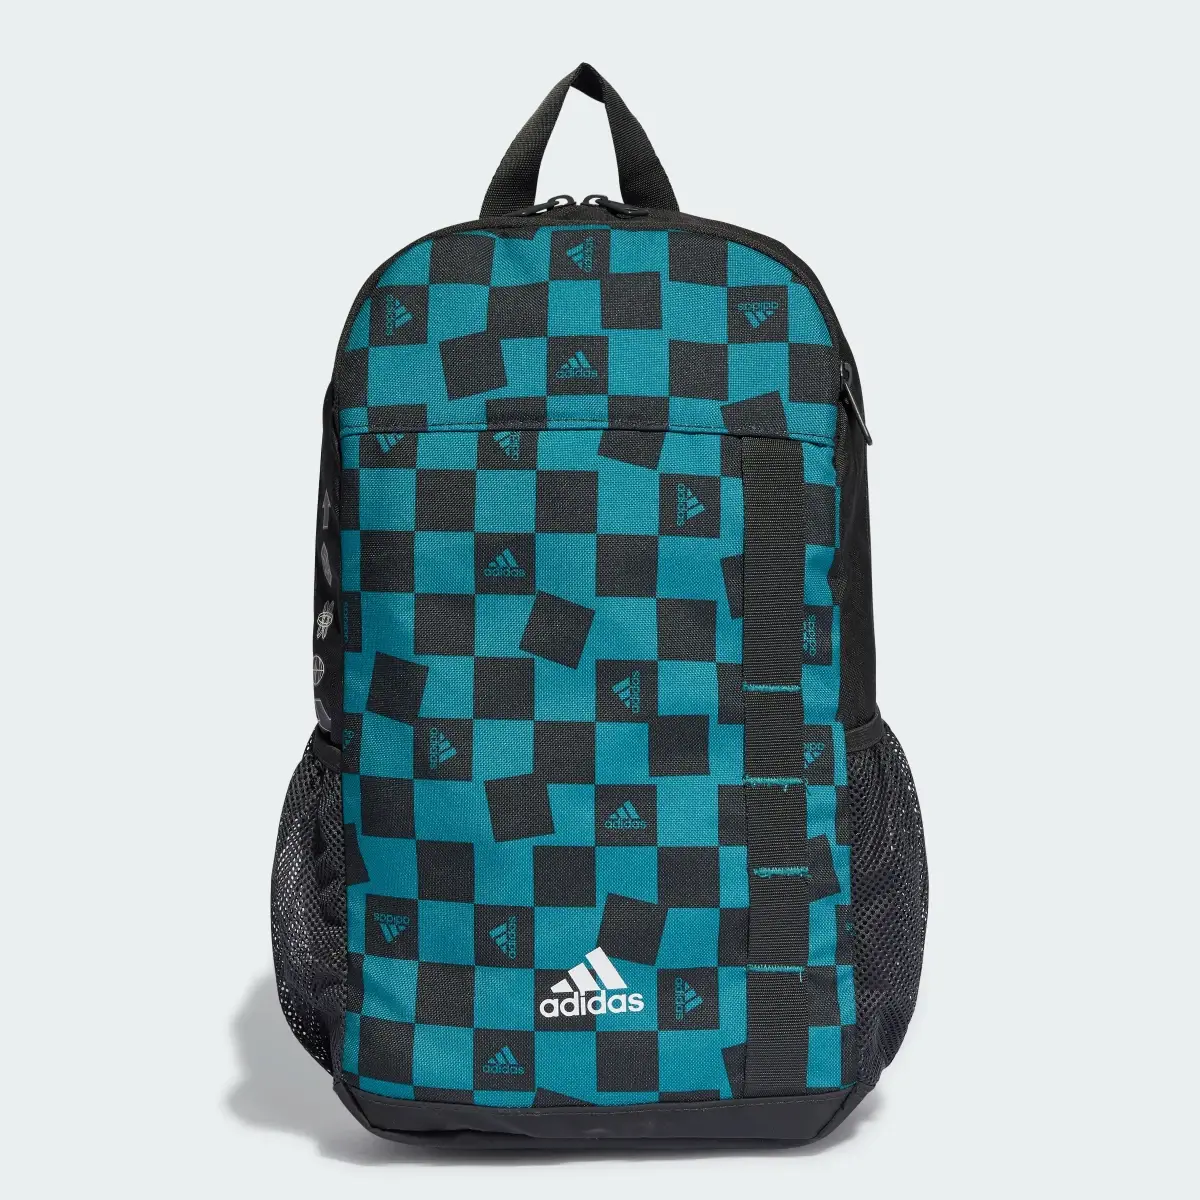 Adidas ARKD3 Backpack. 1